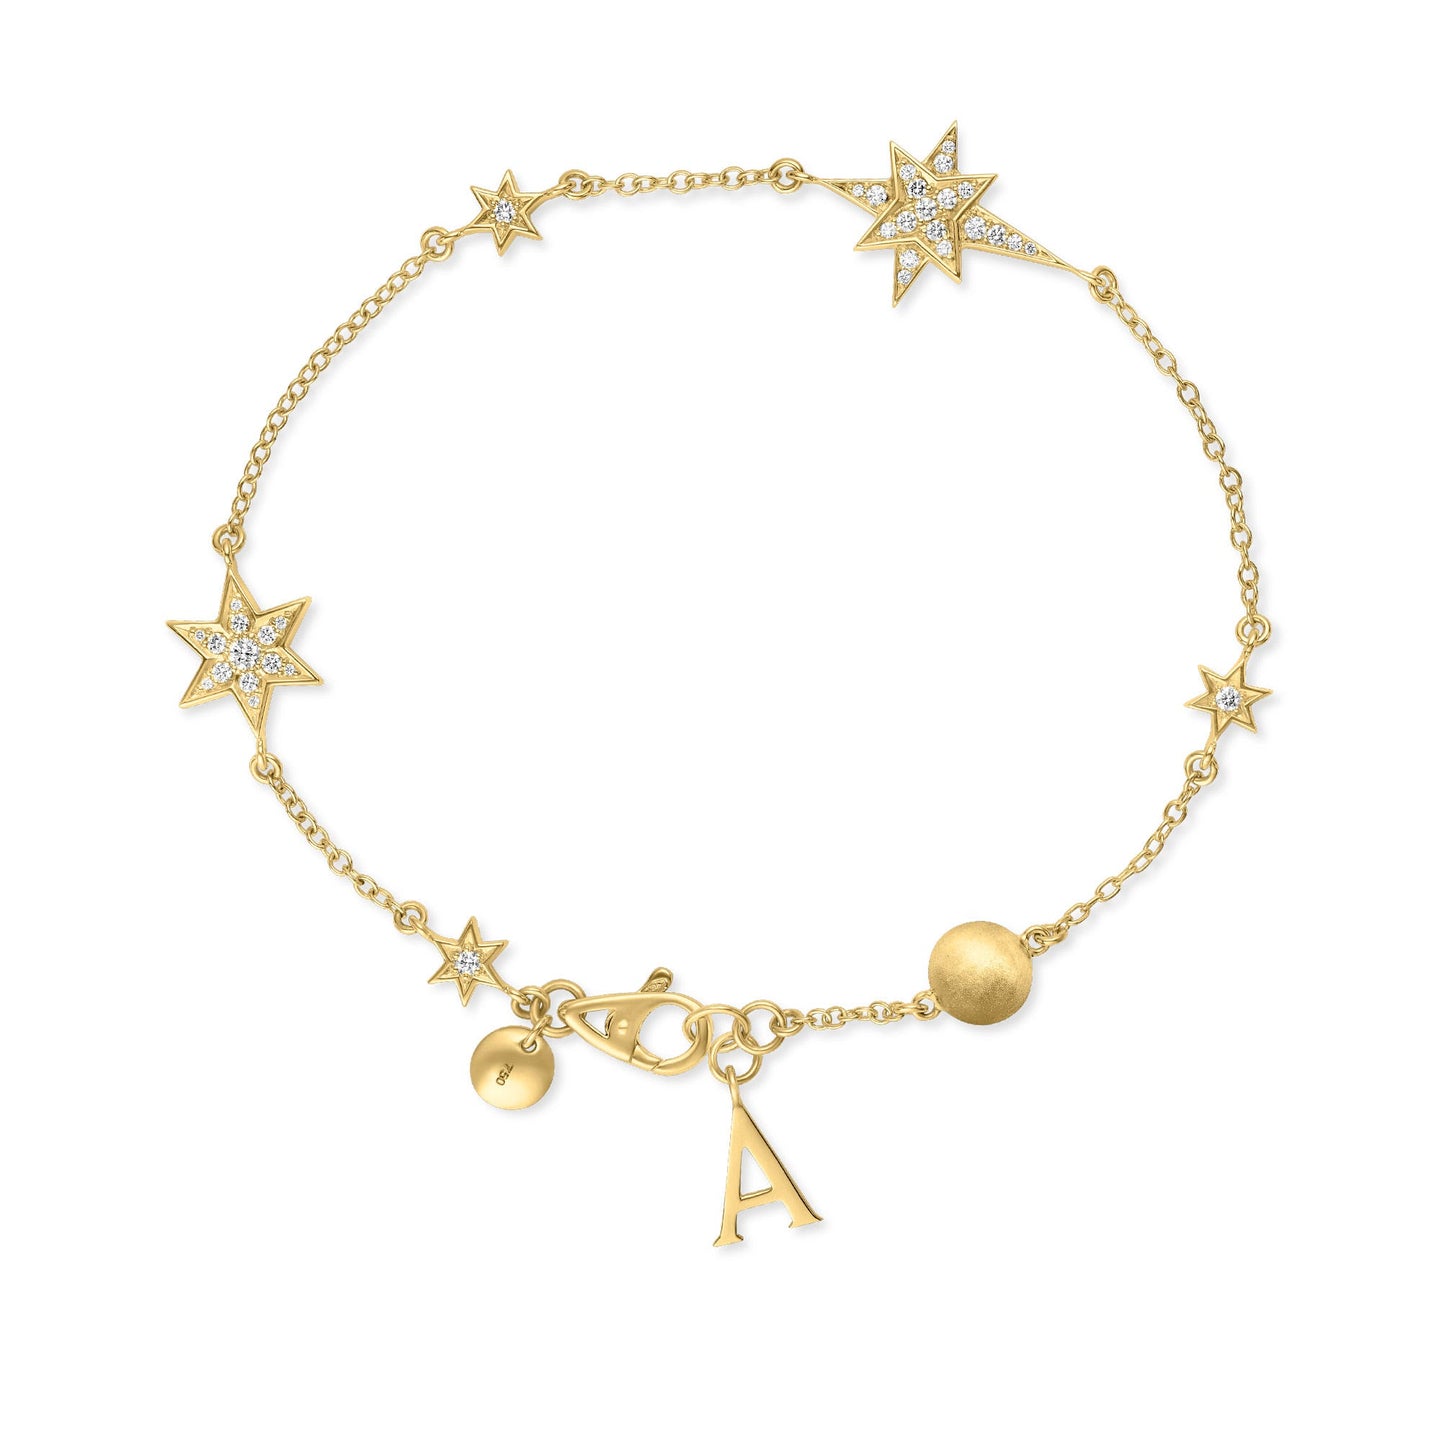 Cosmic Stargazer Bracelet in 18ct Yellow Gold with Diamonds